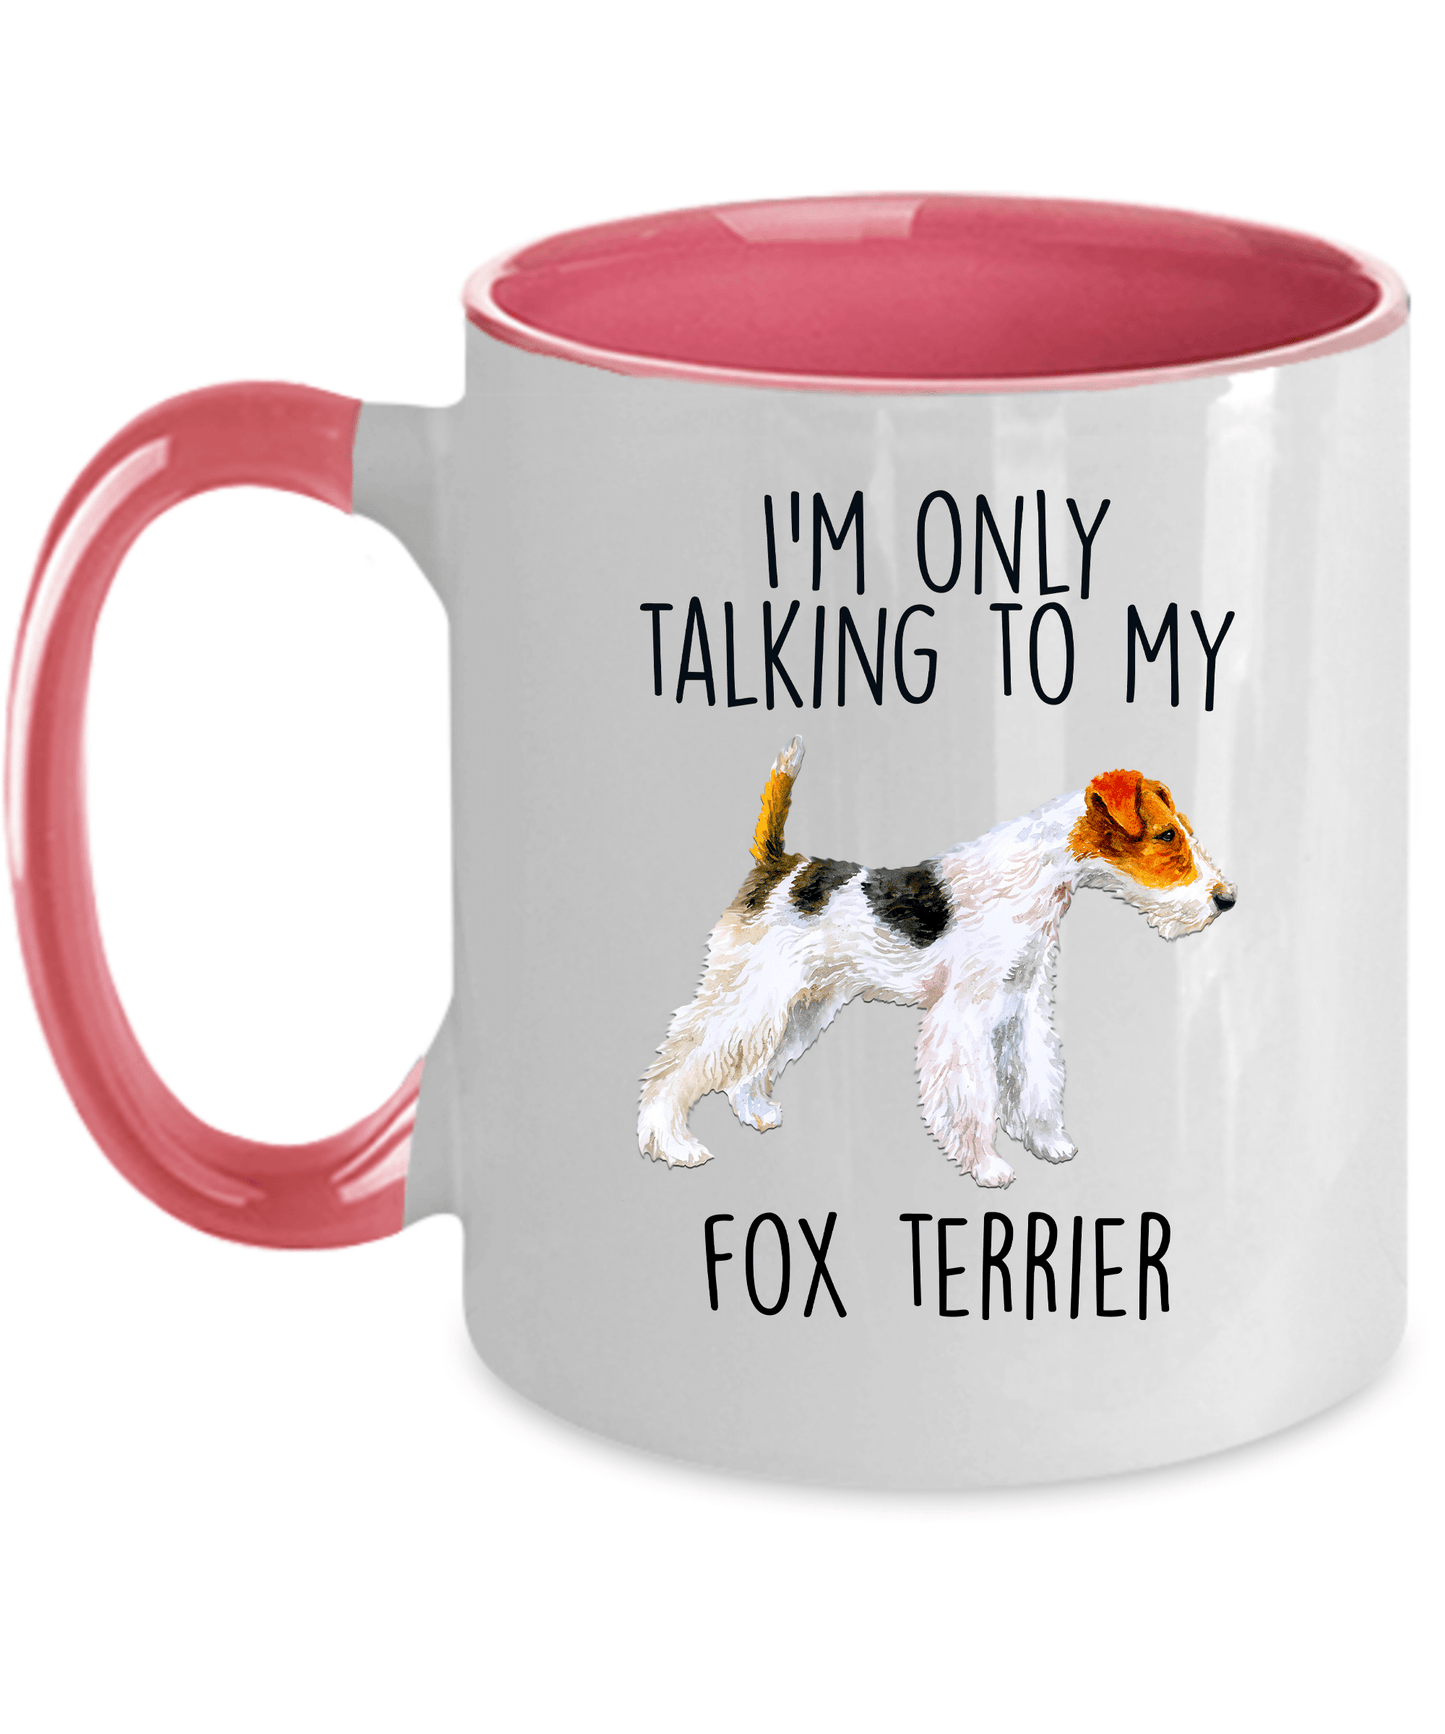 Fox Terrier Ceramic Coffee Mug - I'm Only Talking to my Dog